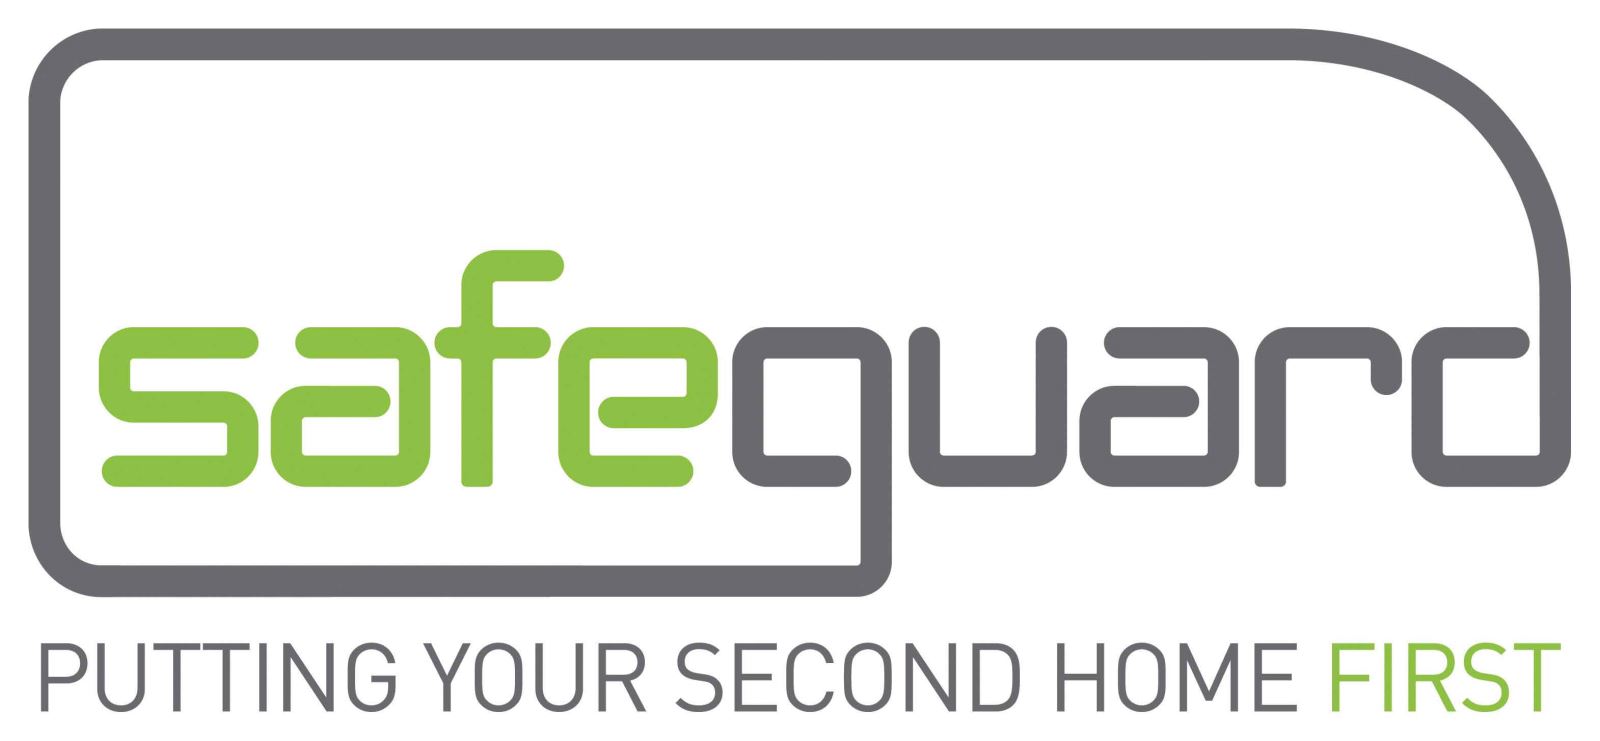 Safeguard motorhome insurance logo